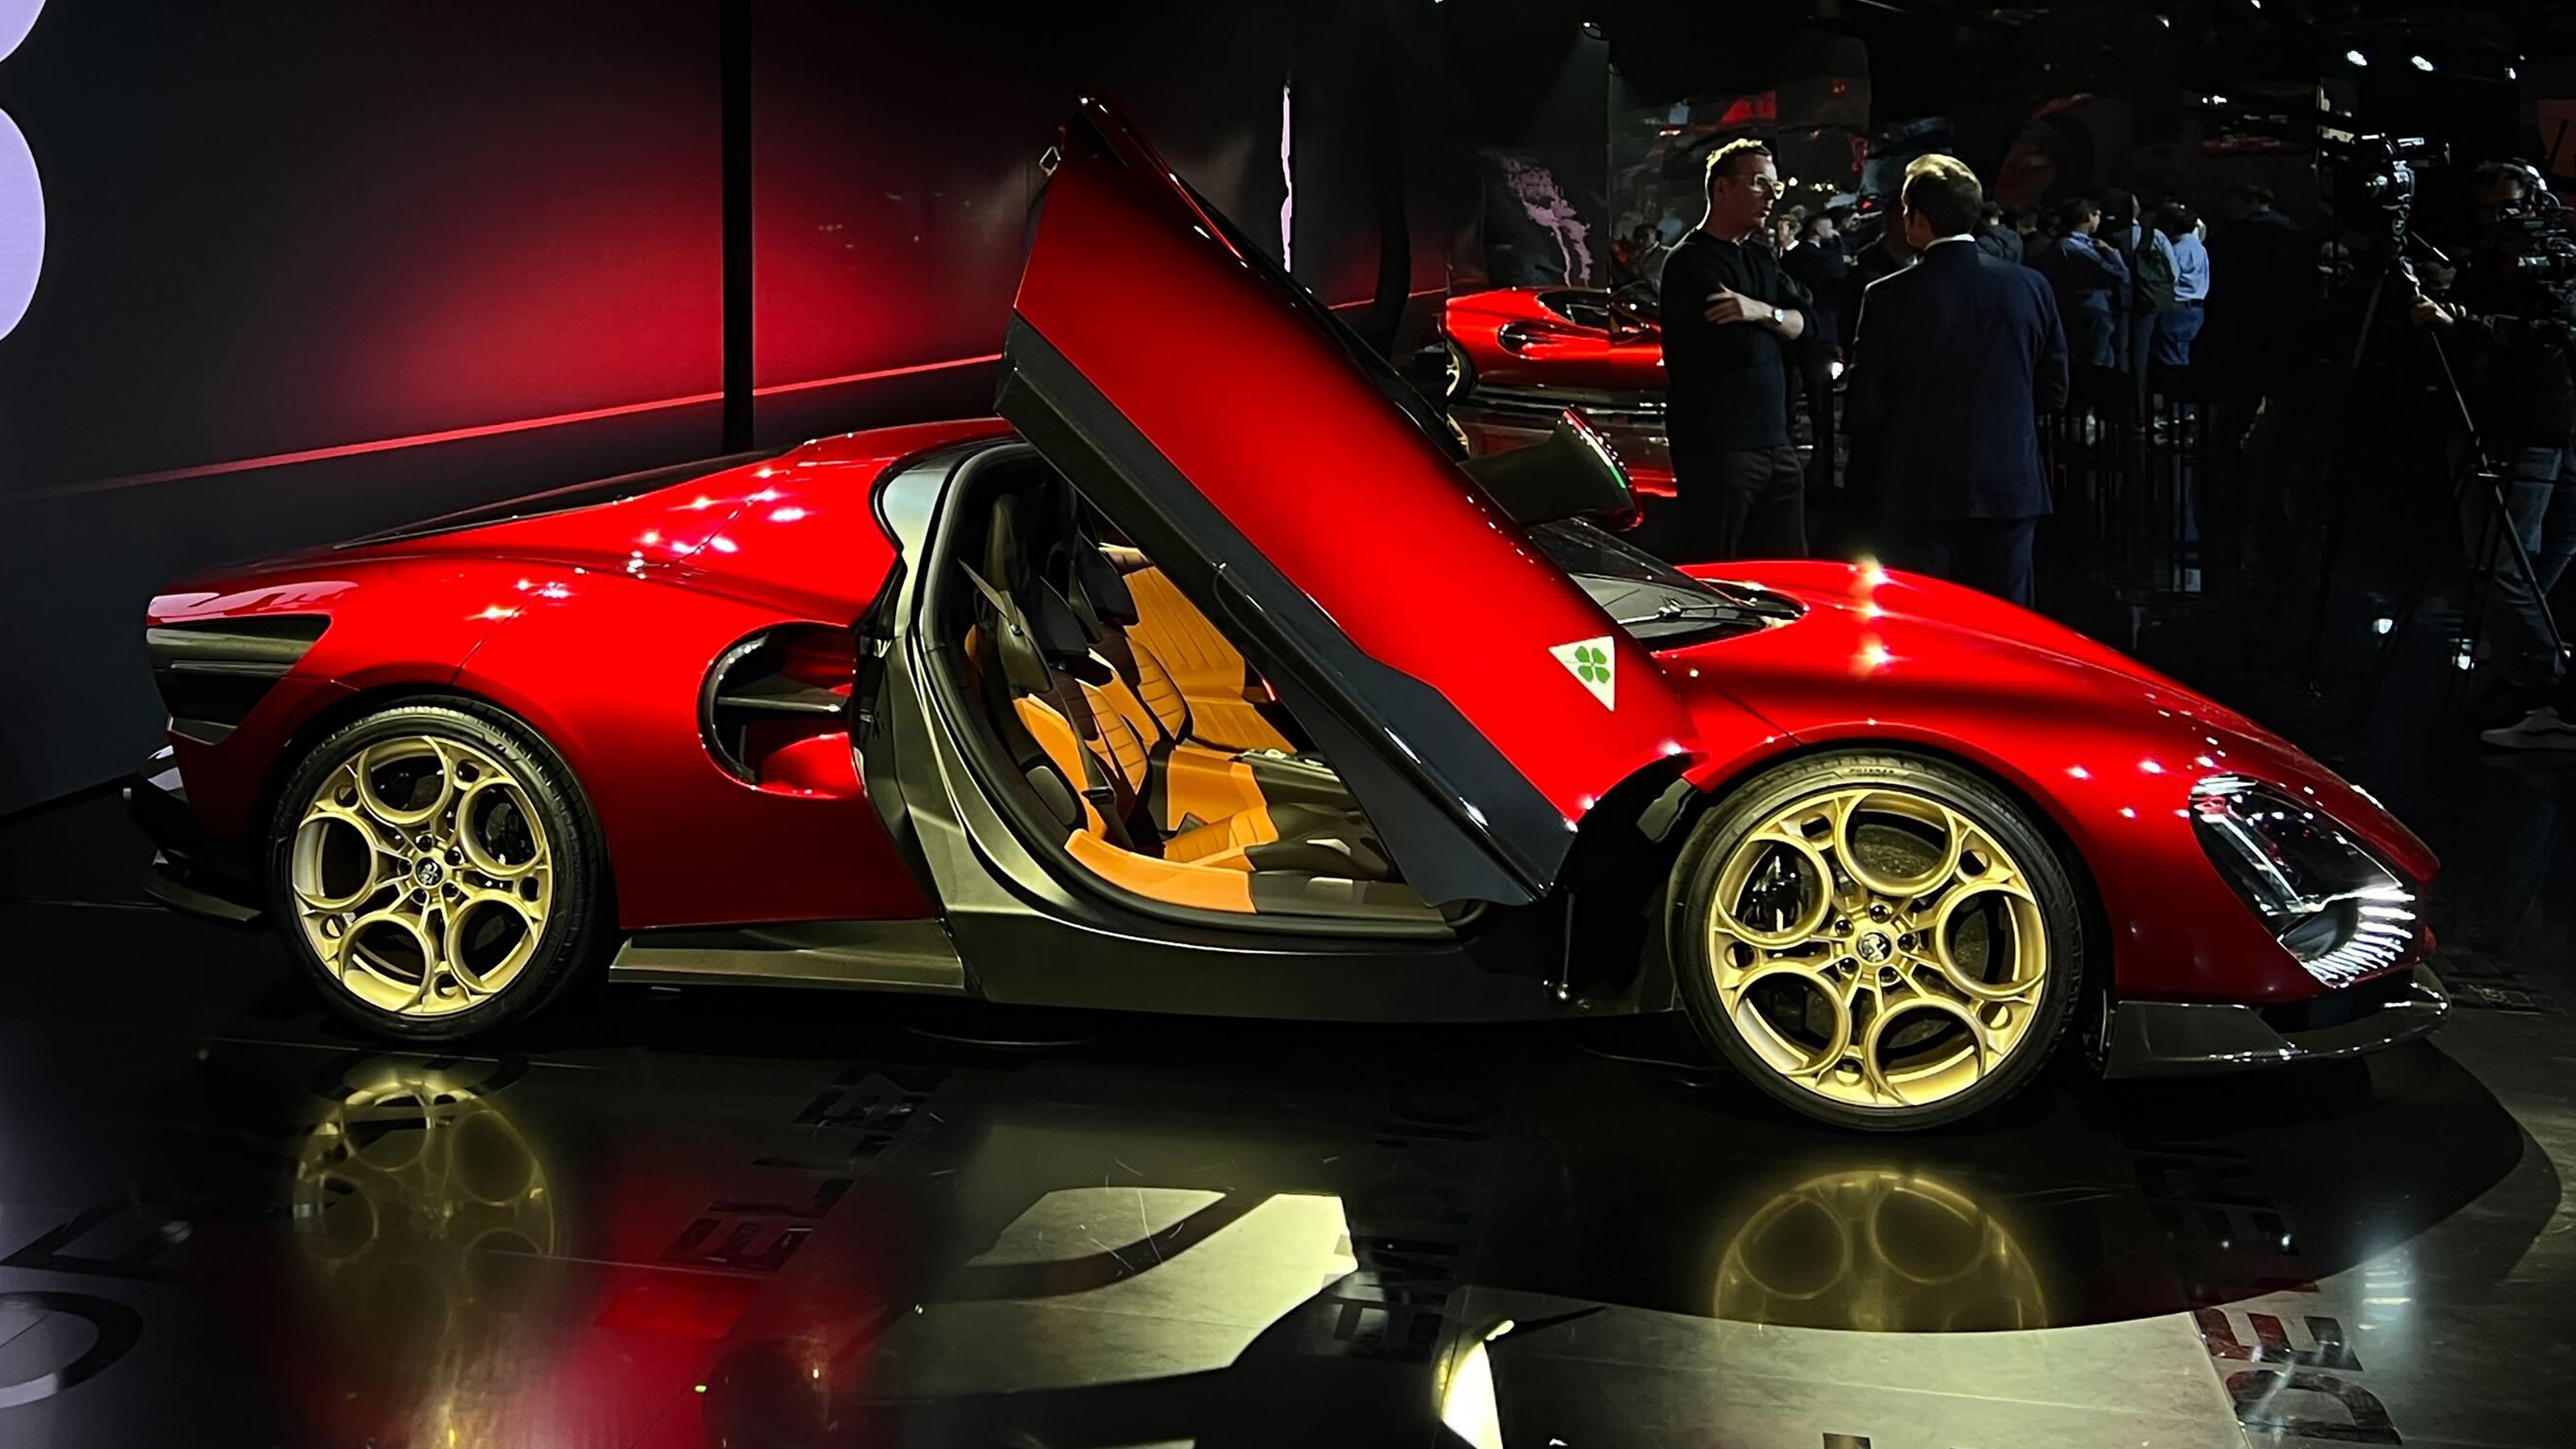 Alfa Romeo 33 Stradale supercar: specs, performance and price